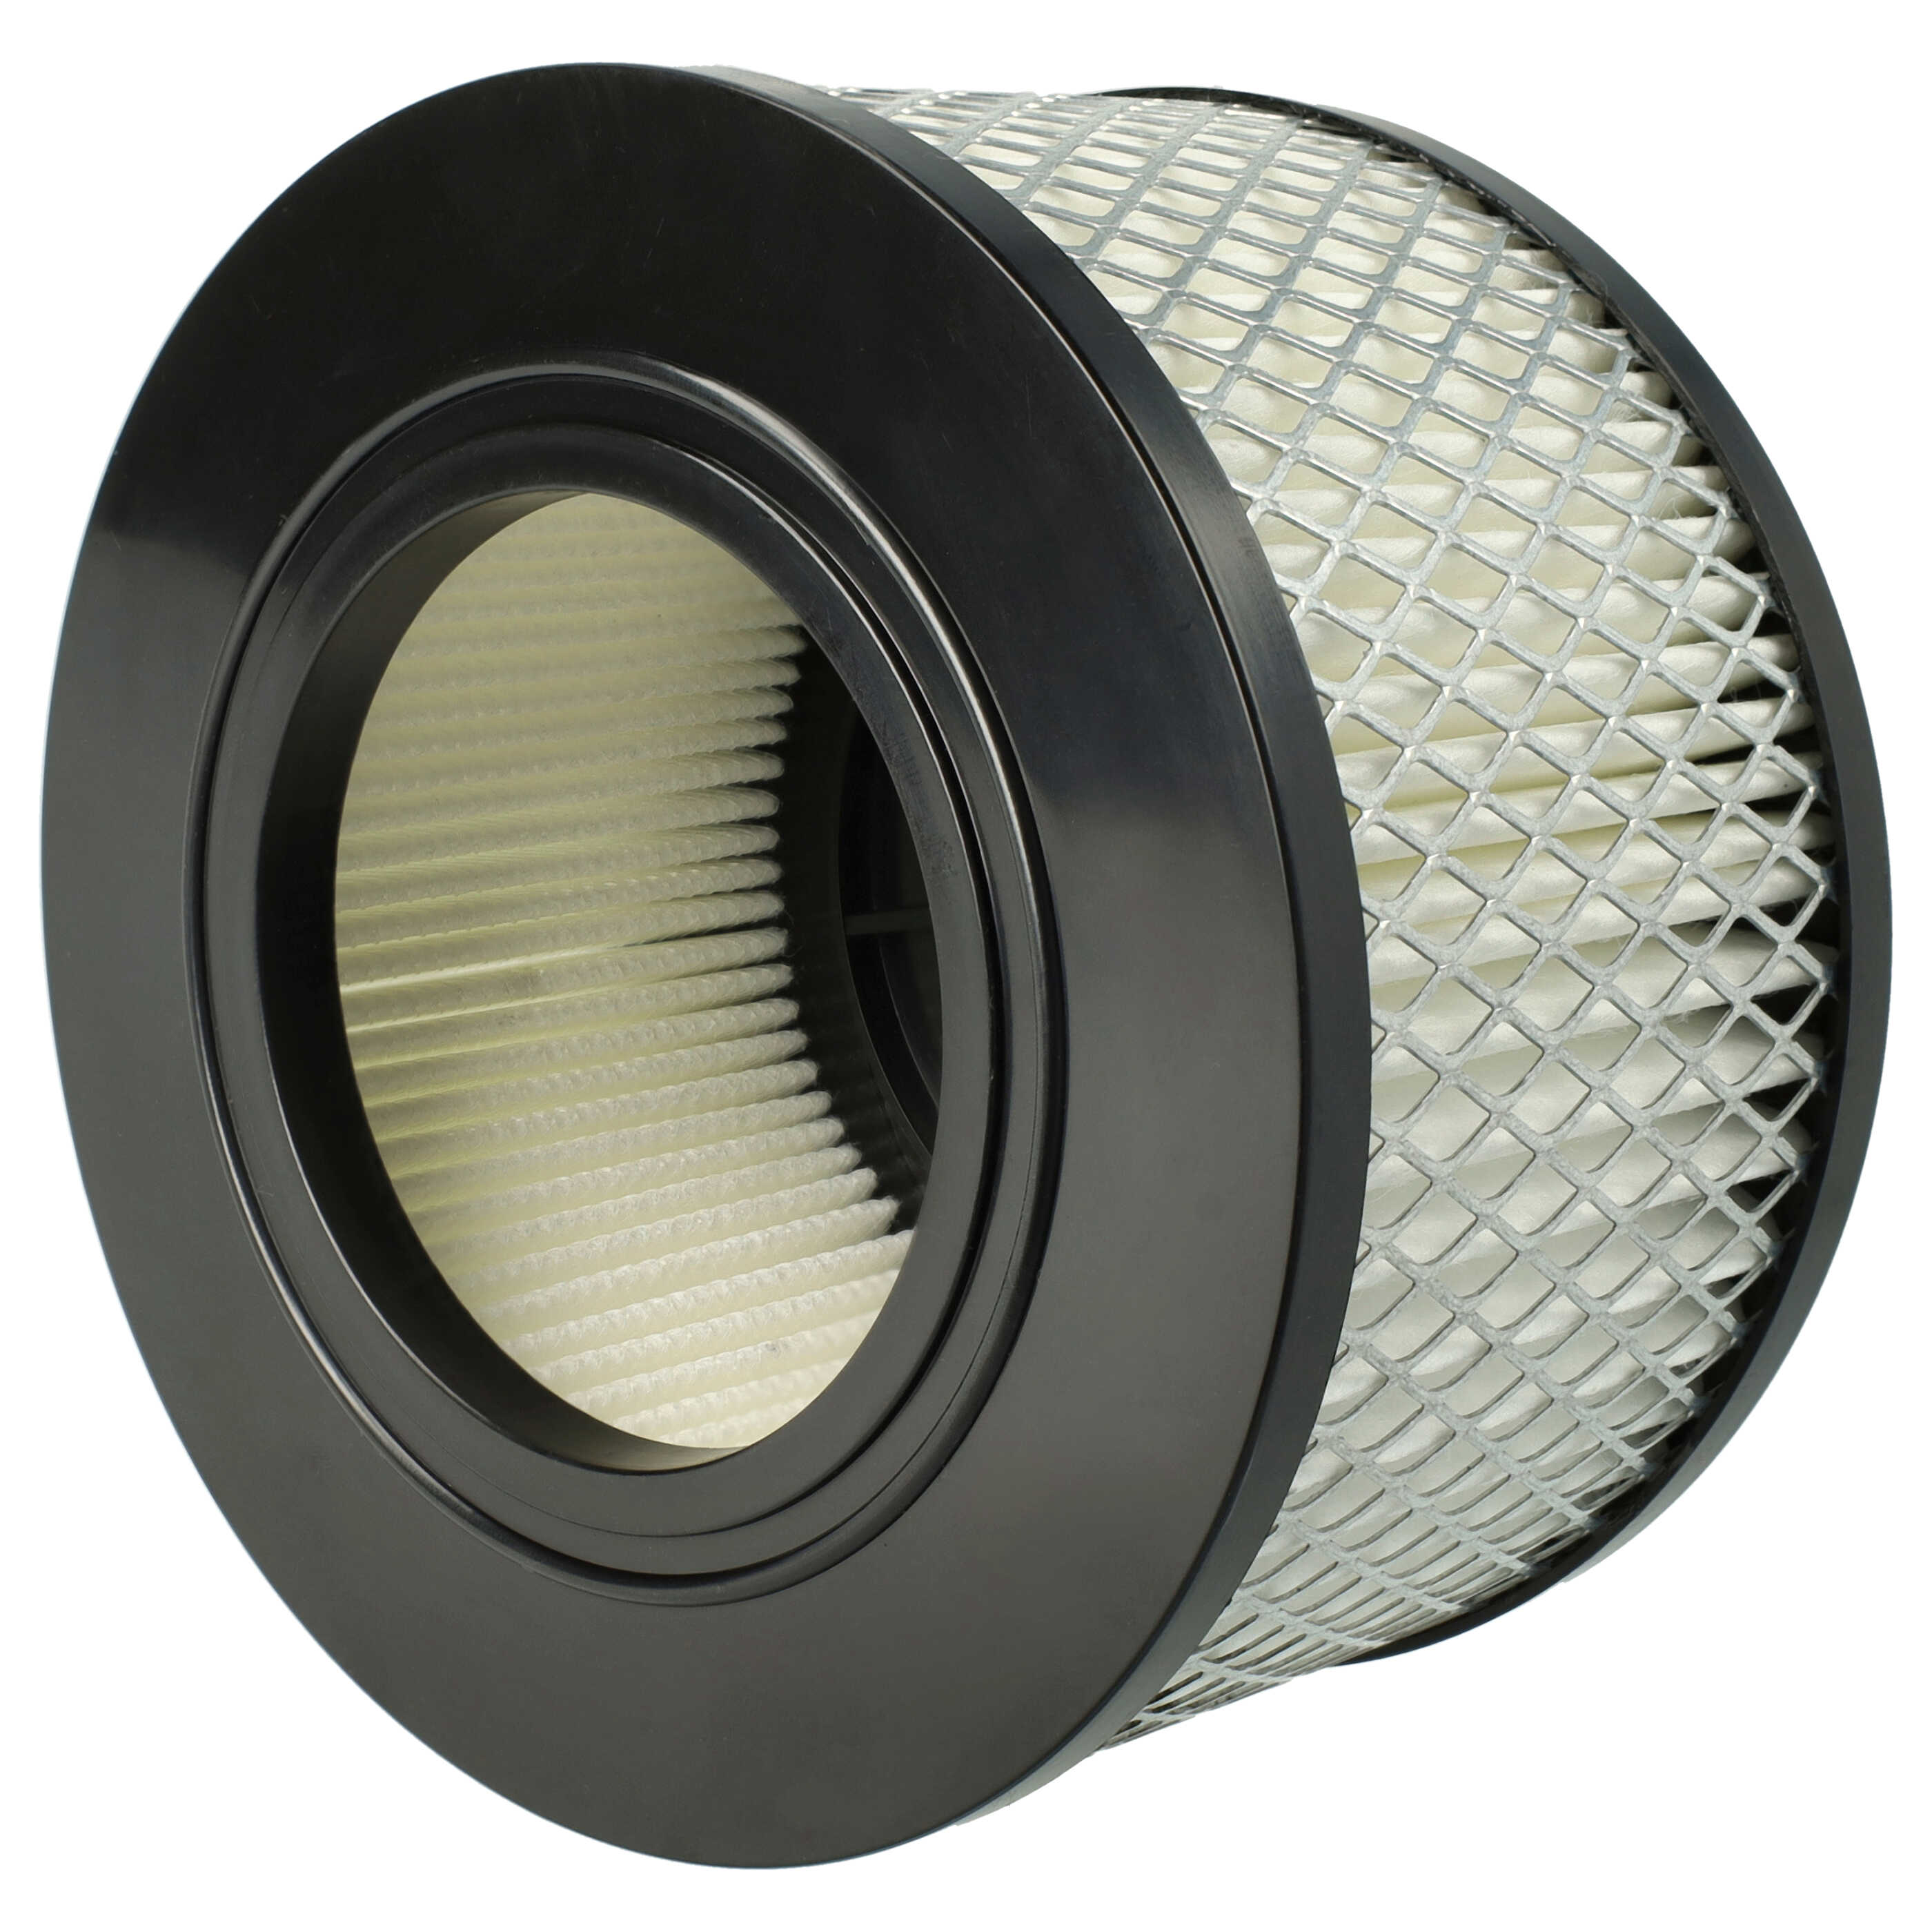 1x HEPA filter replaces Flex 445.126 for Mirka Vacuum Cleaner, filter class H-asbestos